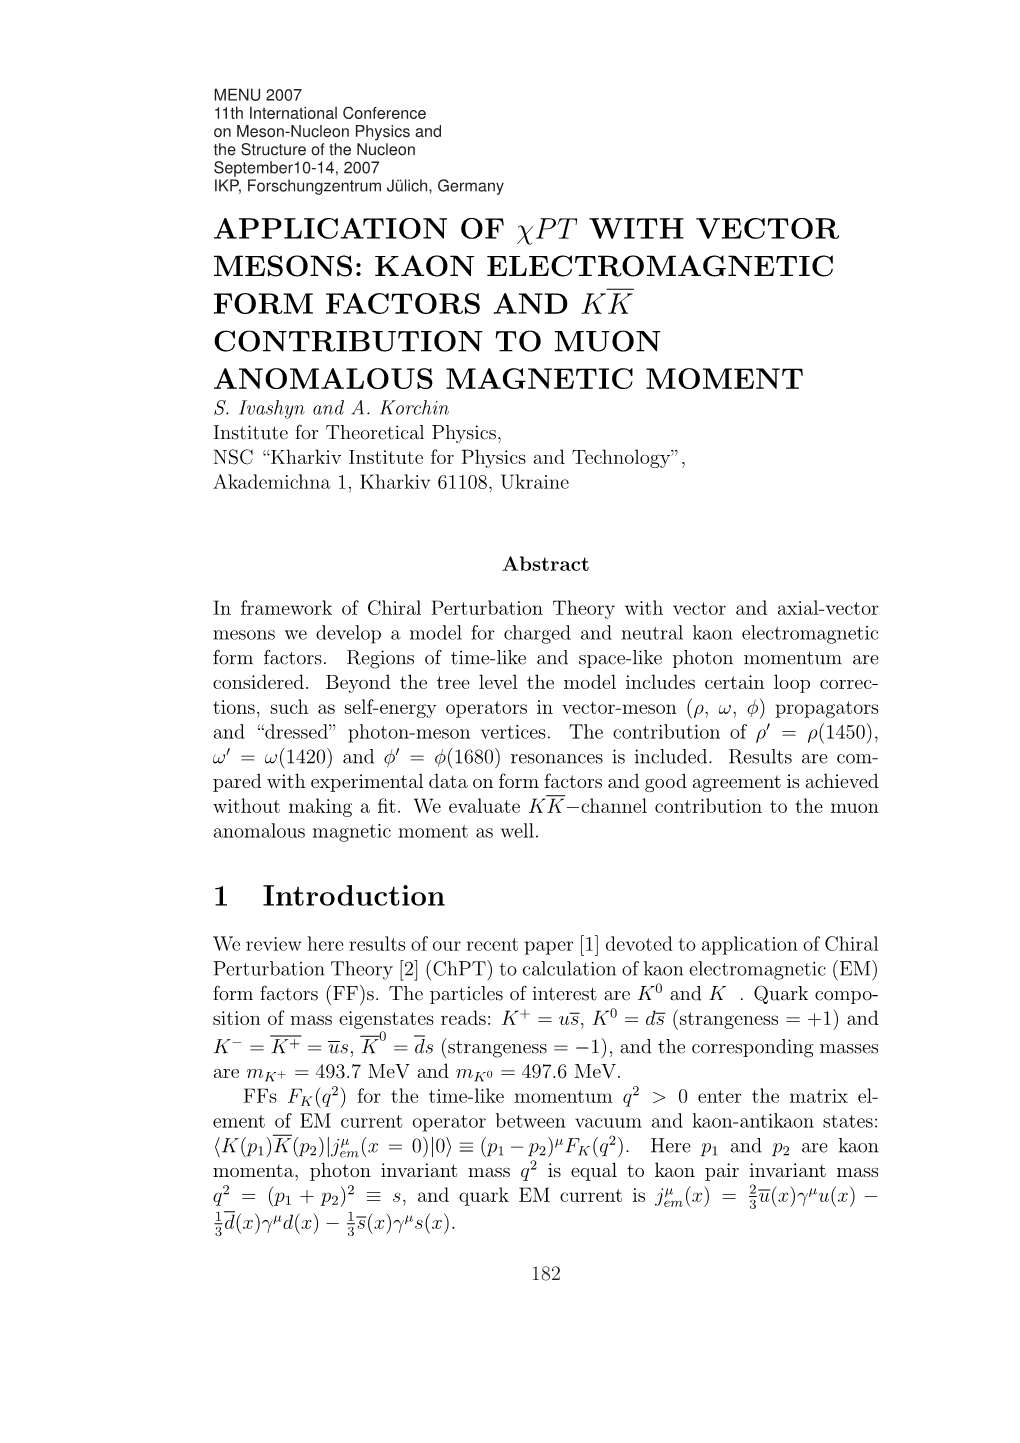 Kaon Electromagnetic Form Factors and Kk Contribution to Muon Anomalous Magnetic Moment S